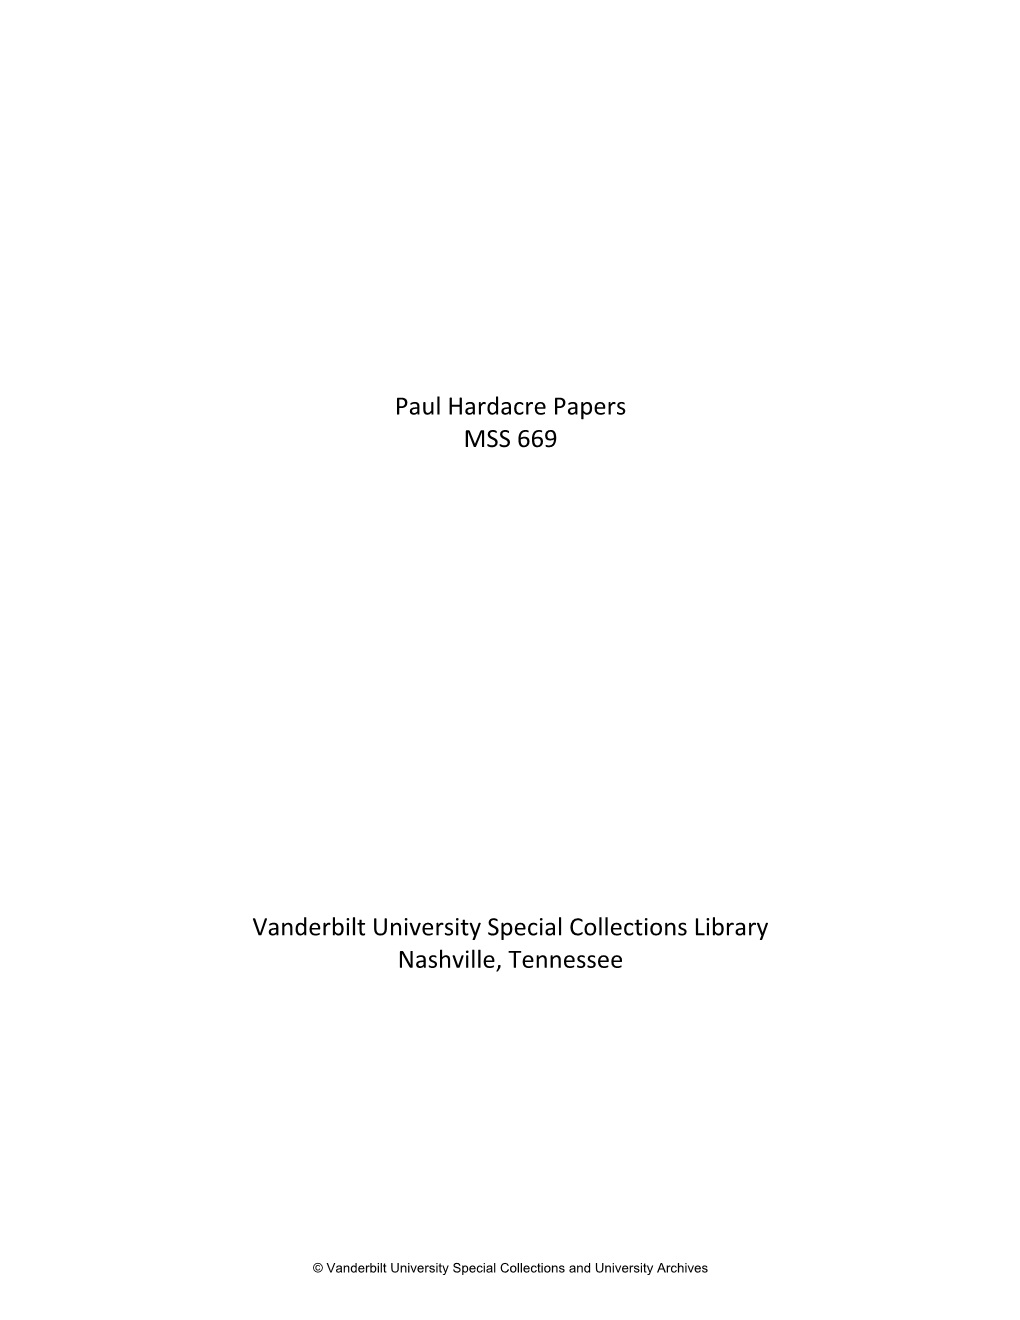 Paul Hardacre Papers MSS 669 Vanderbilt University Special